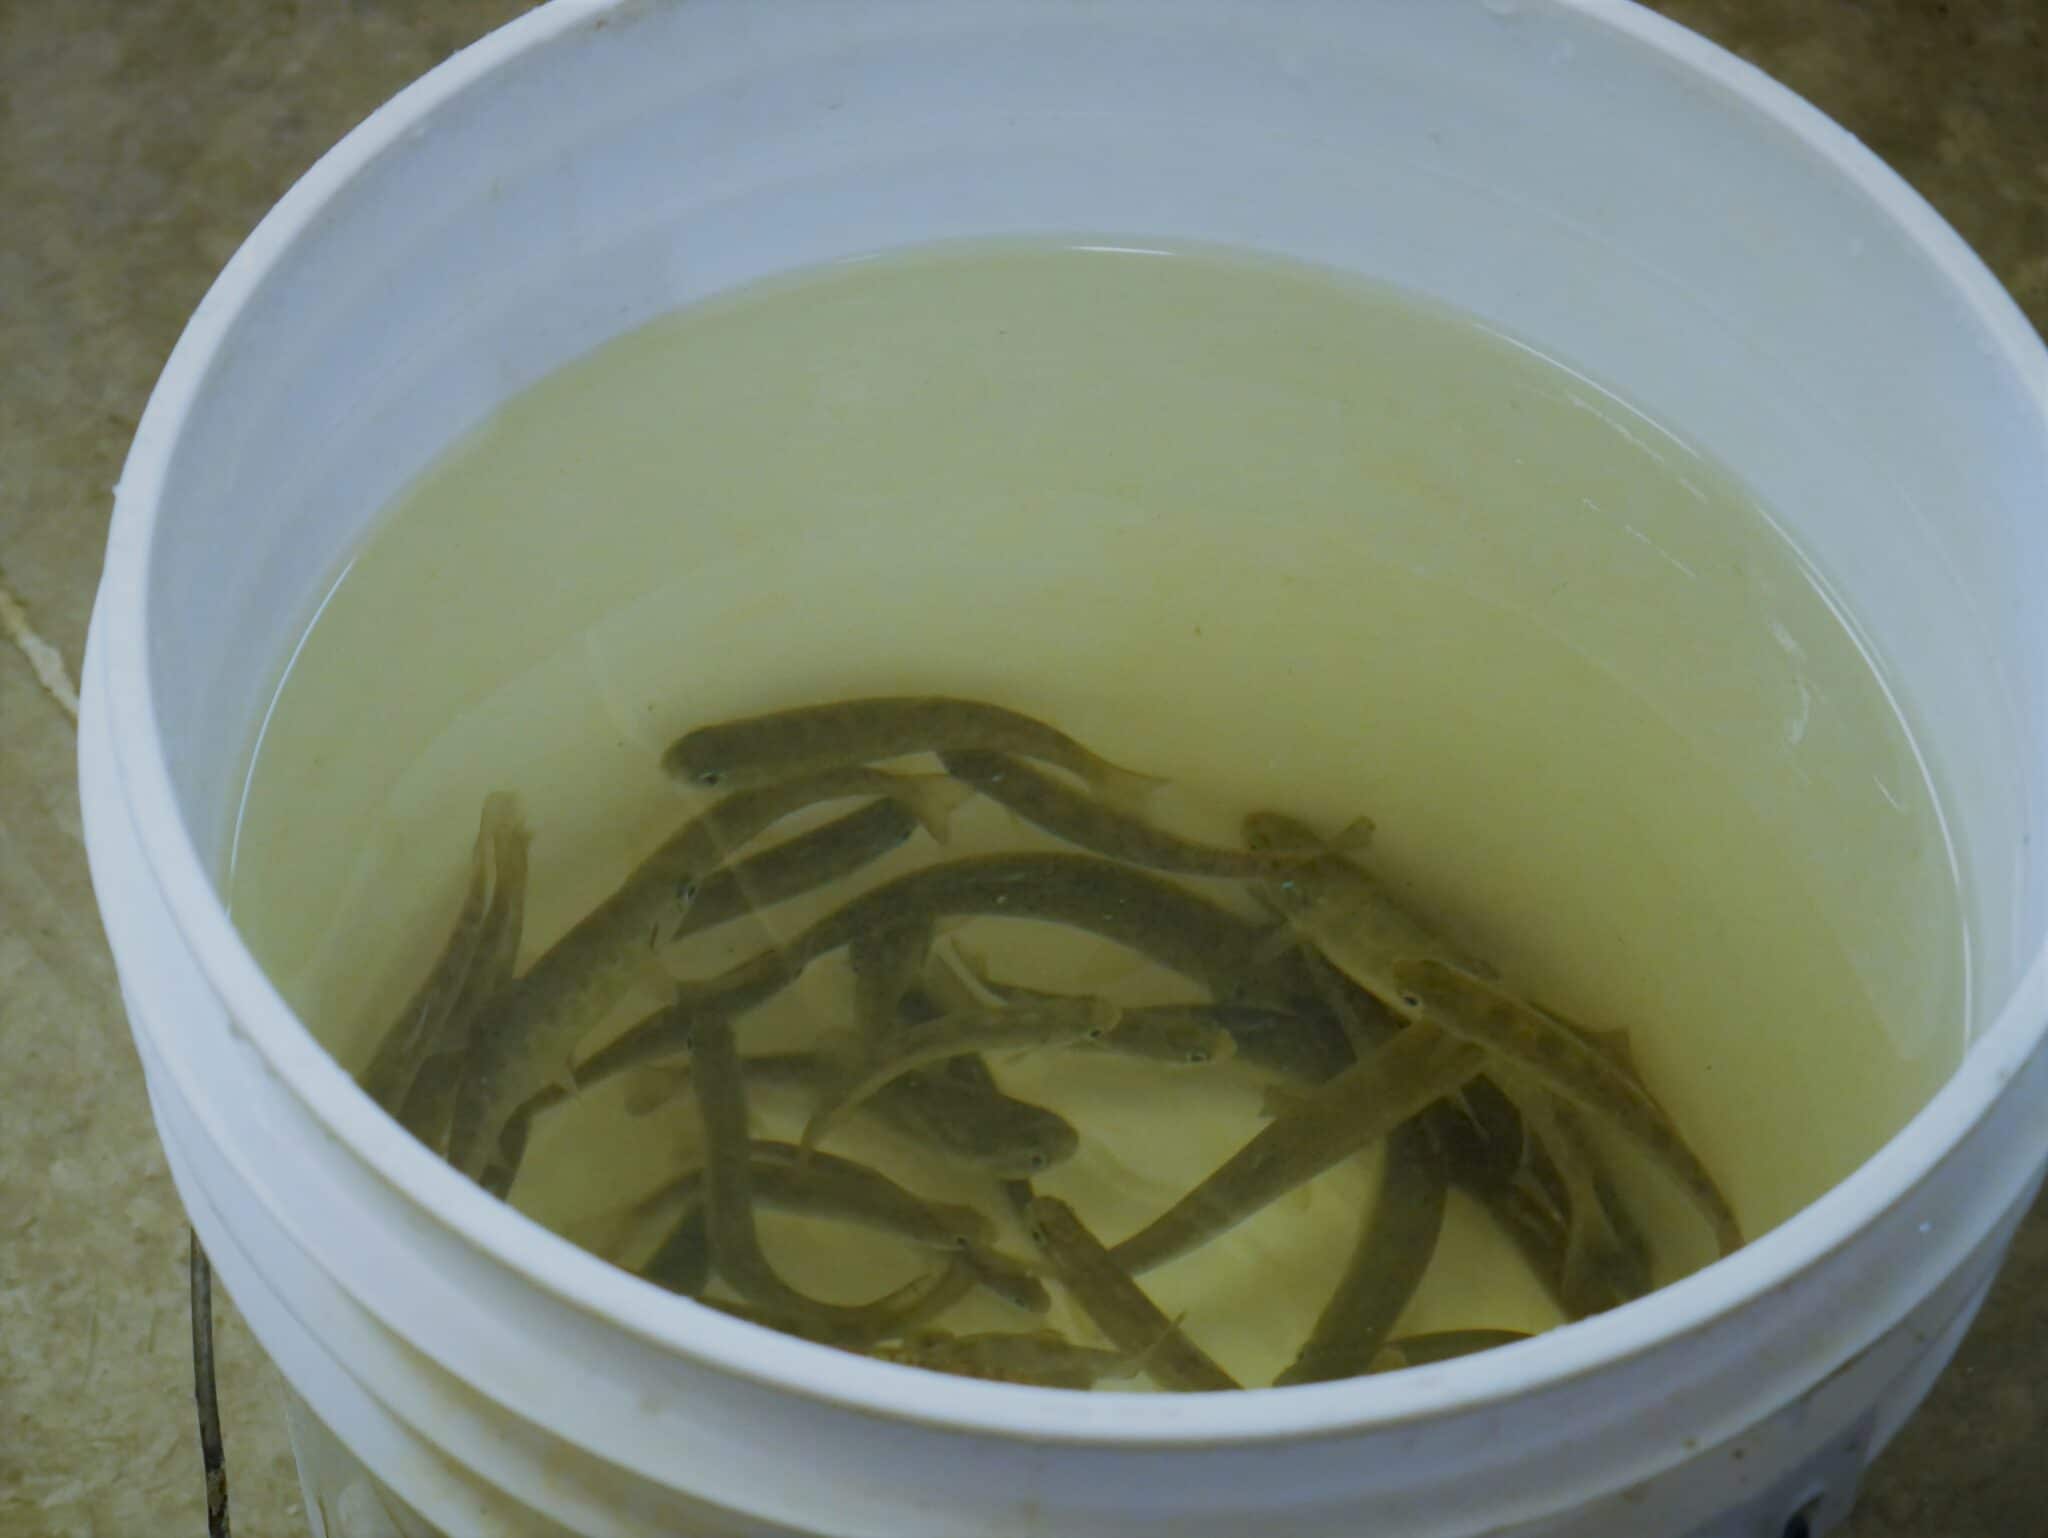 Fish in a 10 gallon bucket